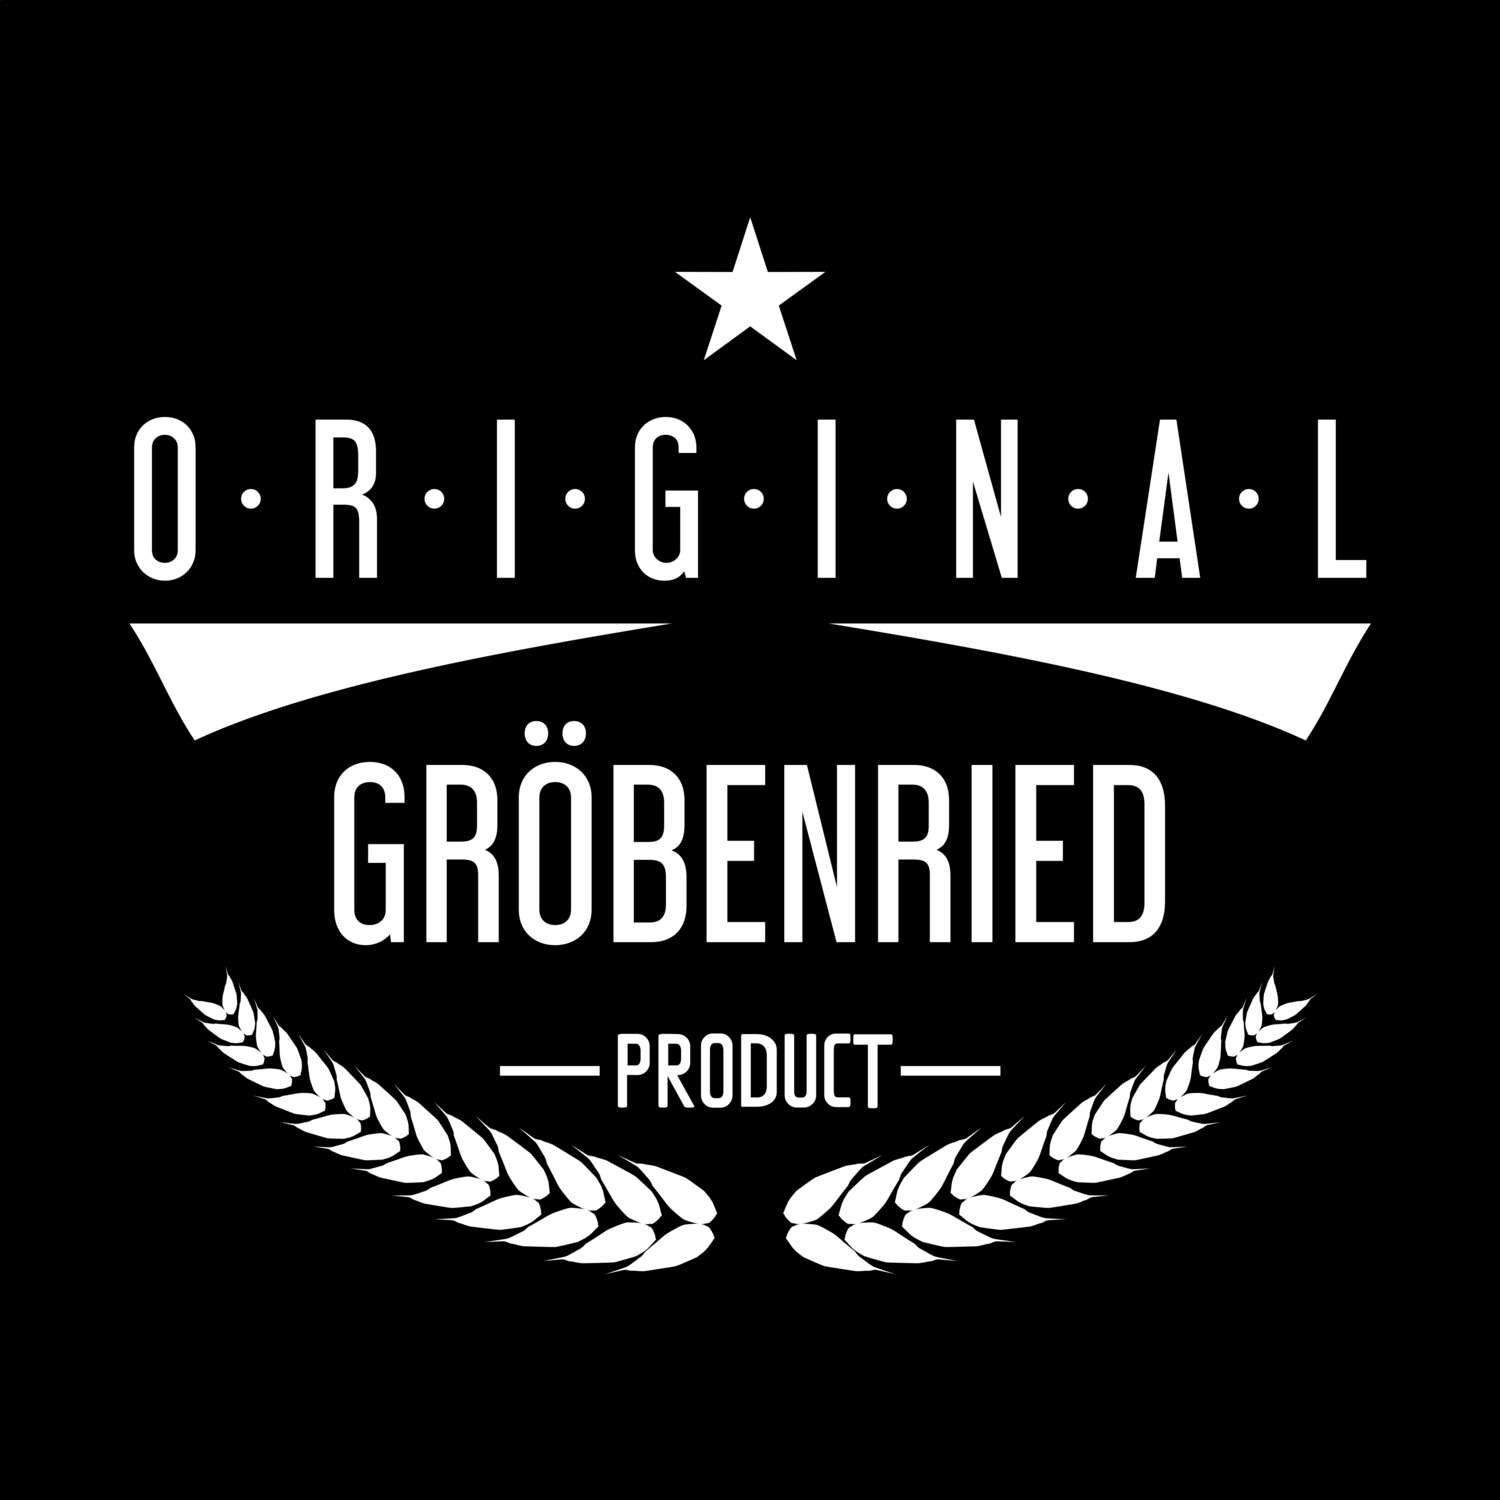 Gröbenried T-Shirt »Original Product«